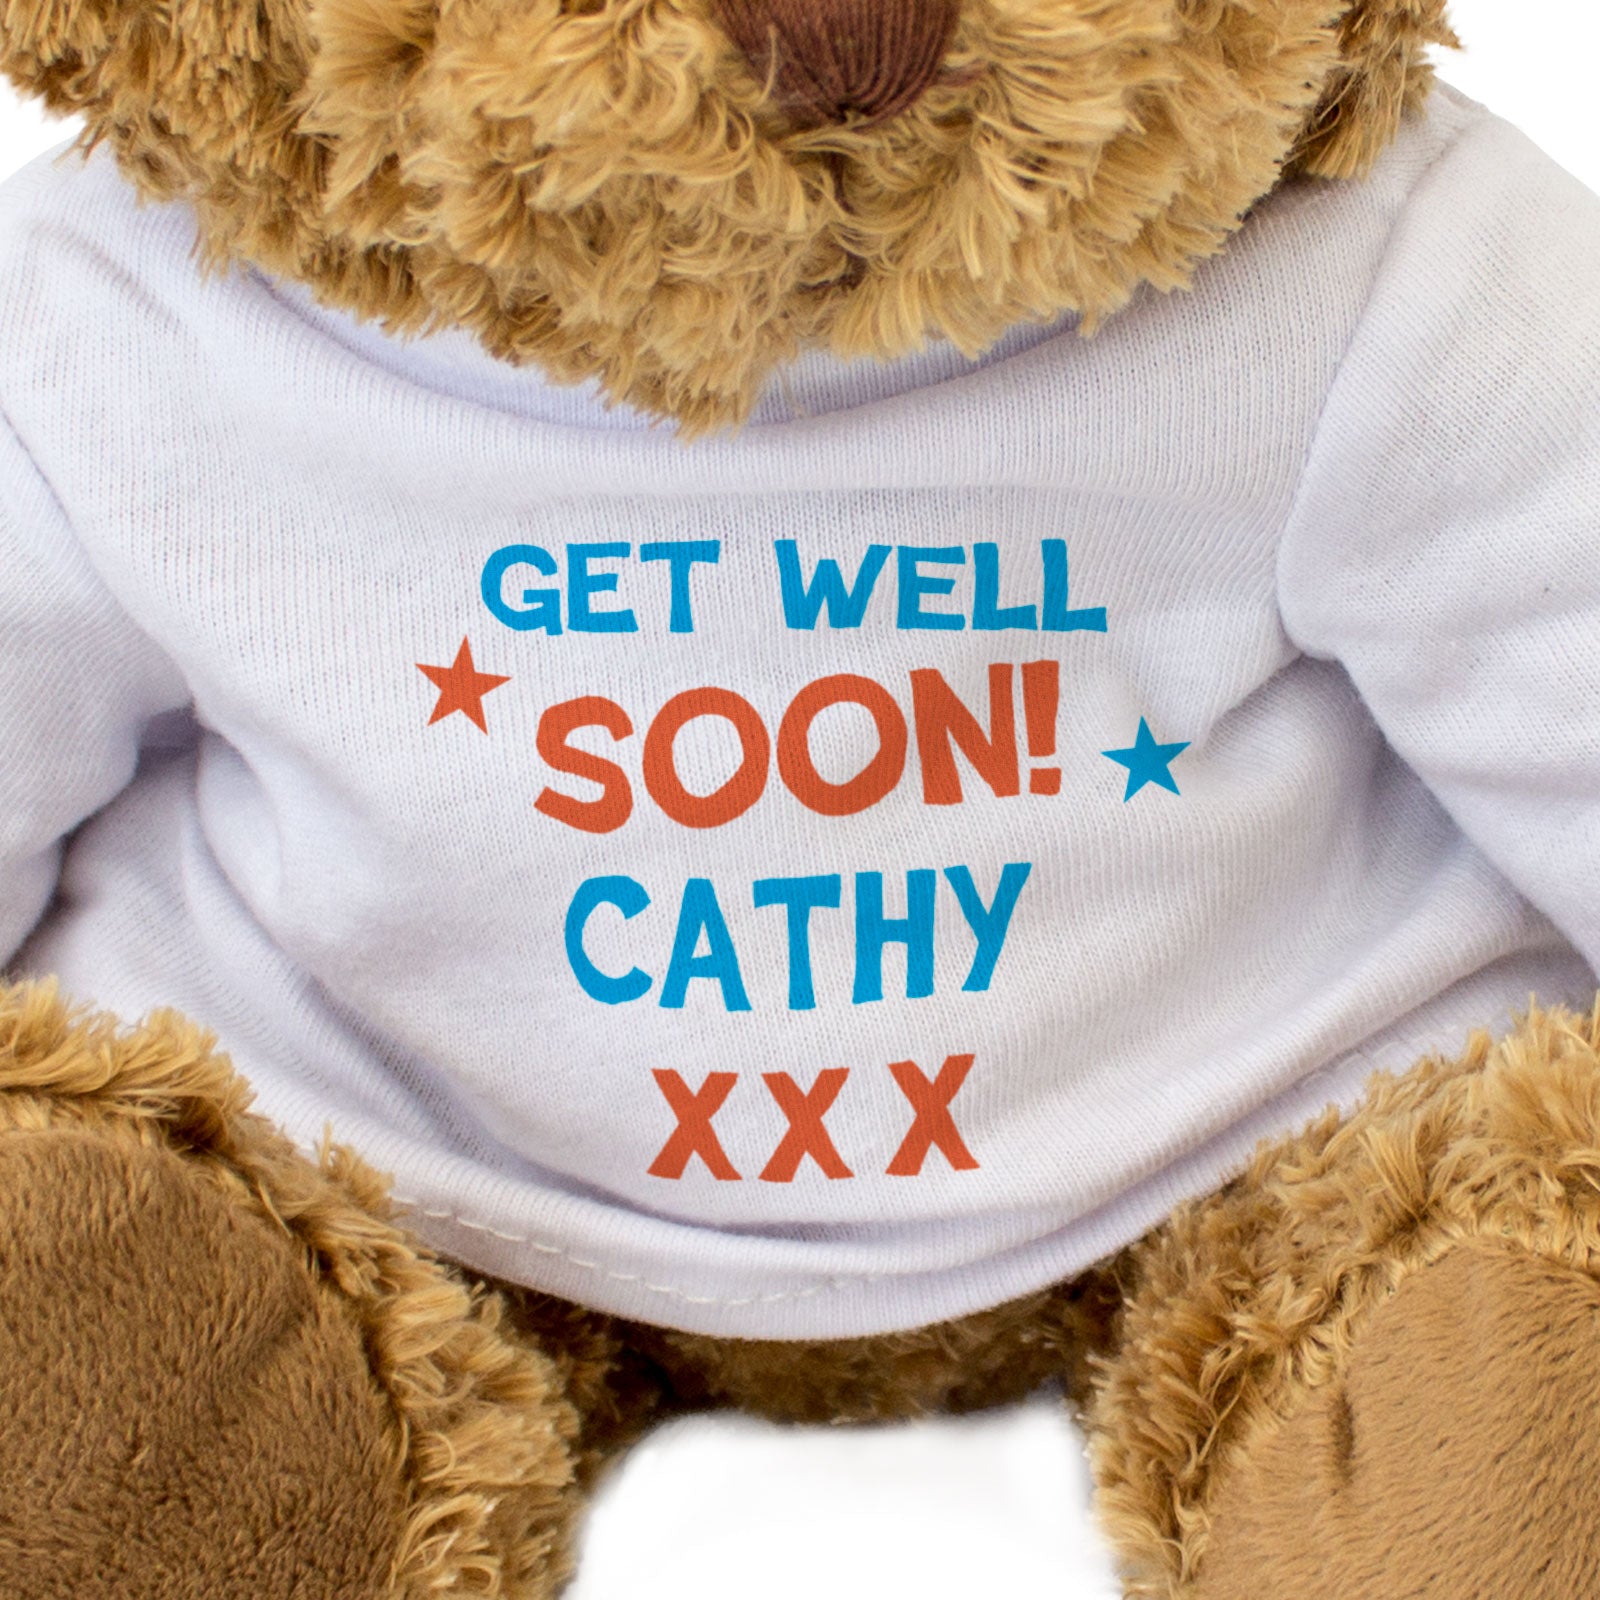 Get Well Soon Cathy - Teddy Bear